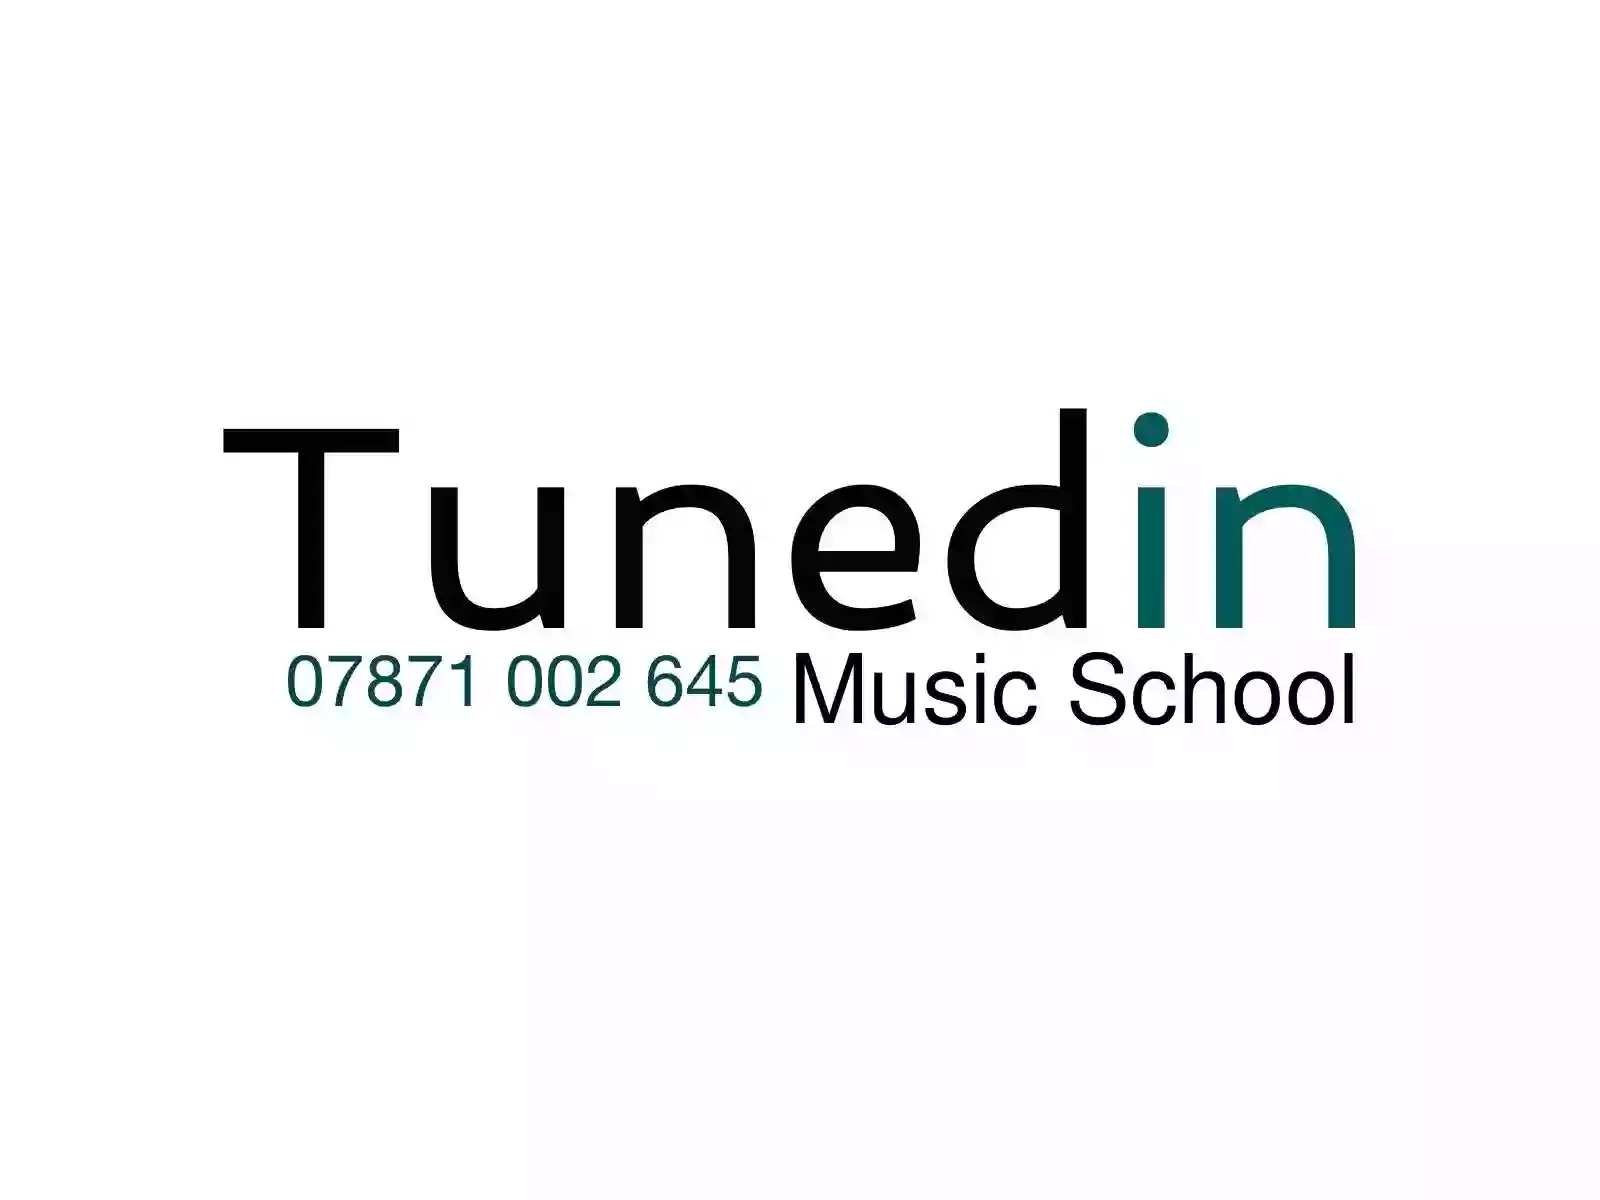 Tunedin Music School